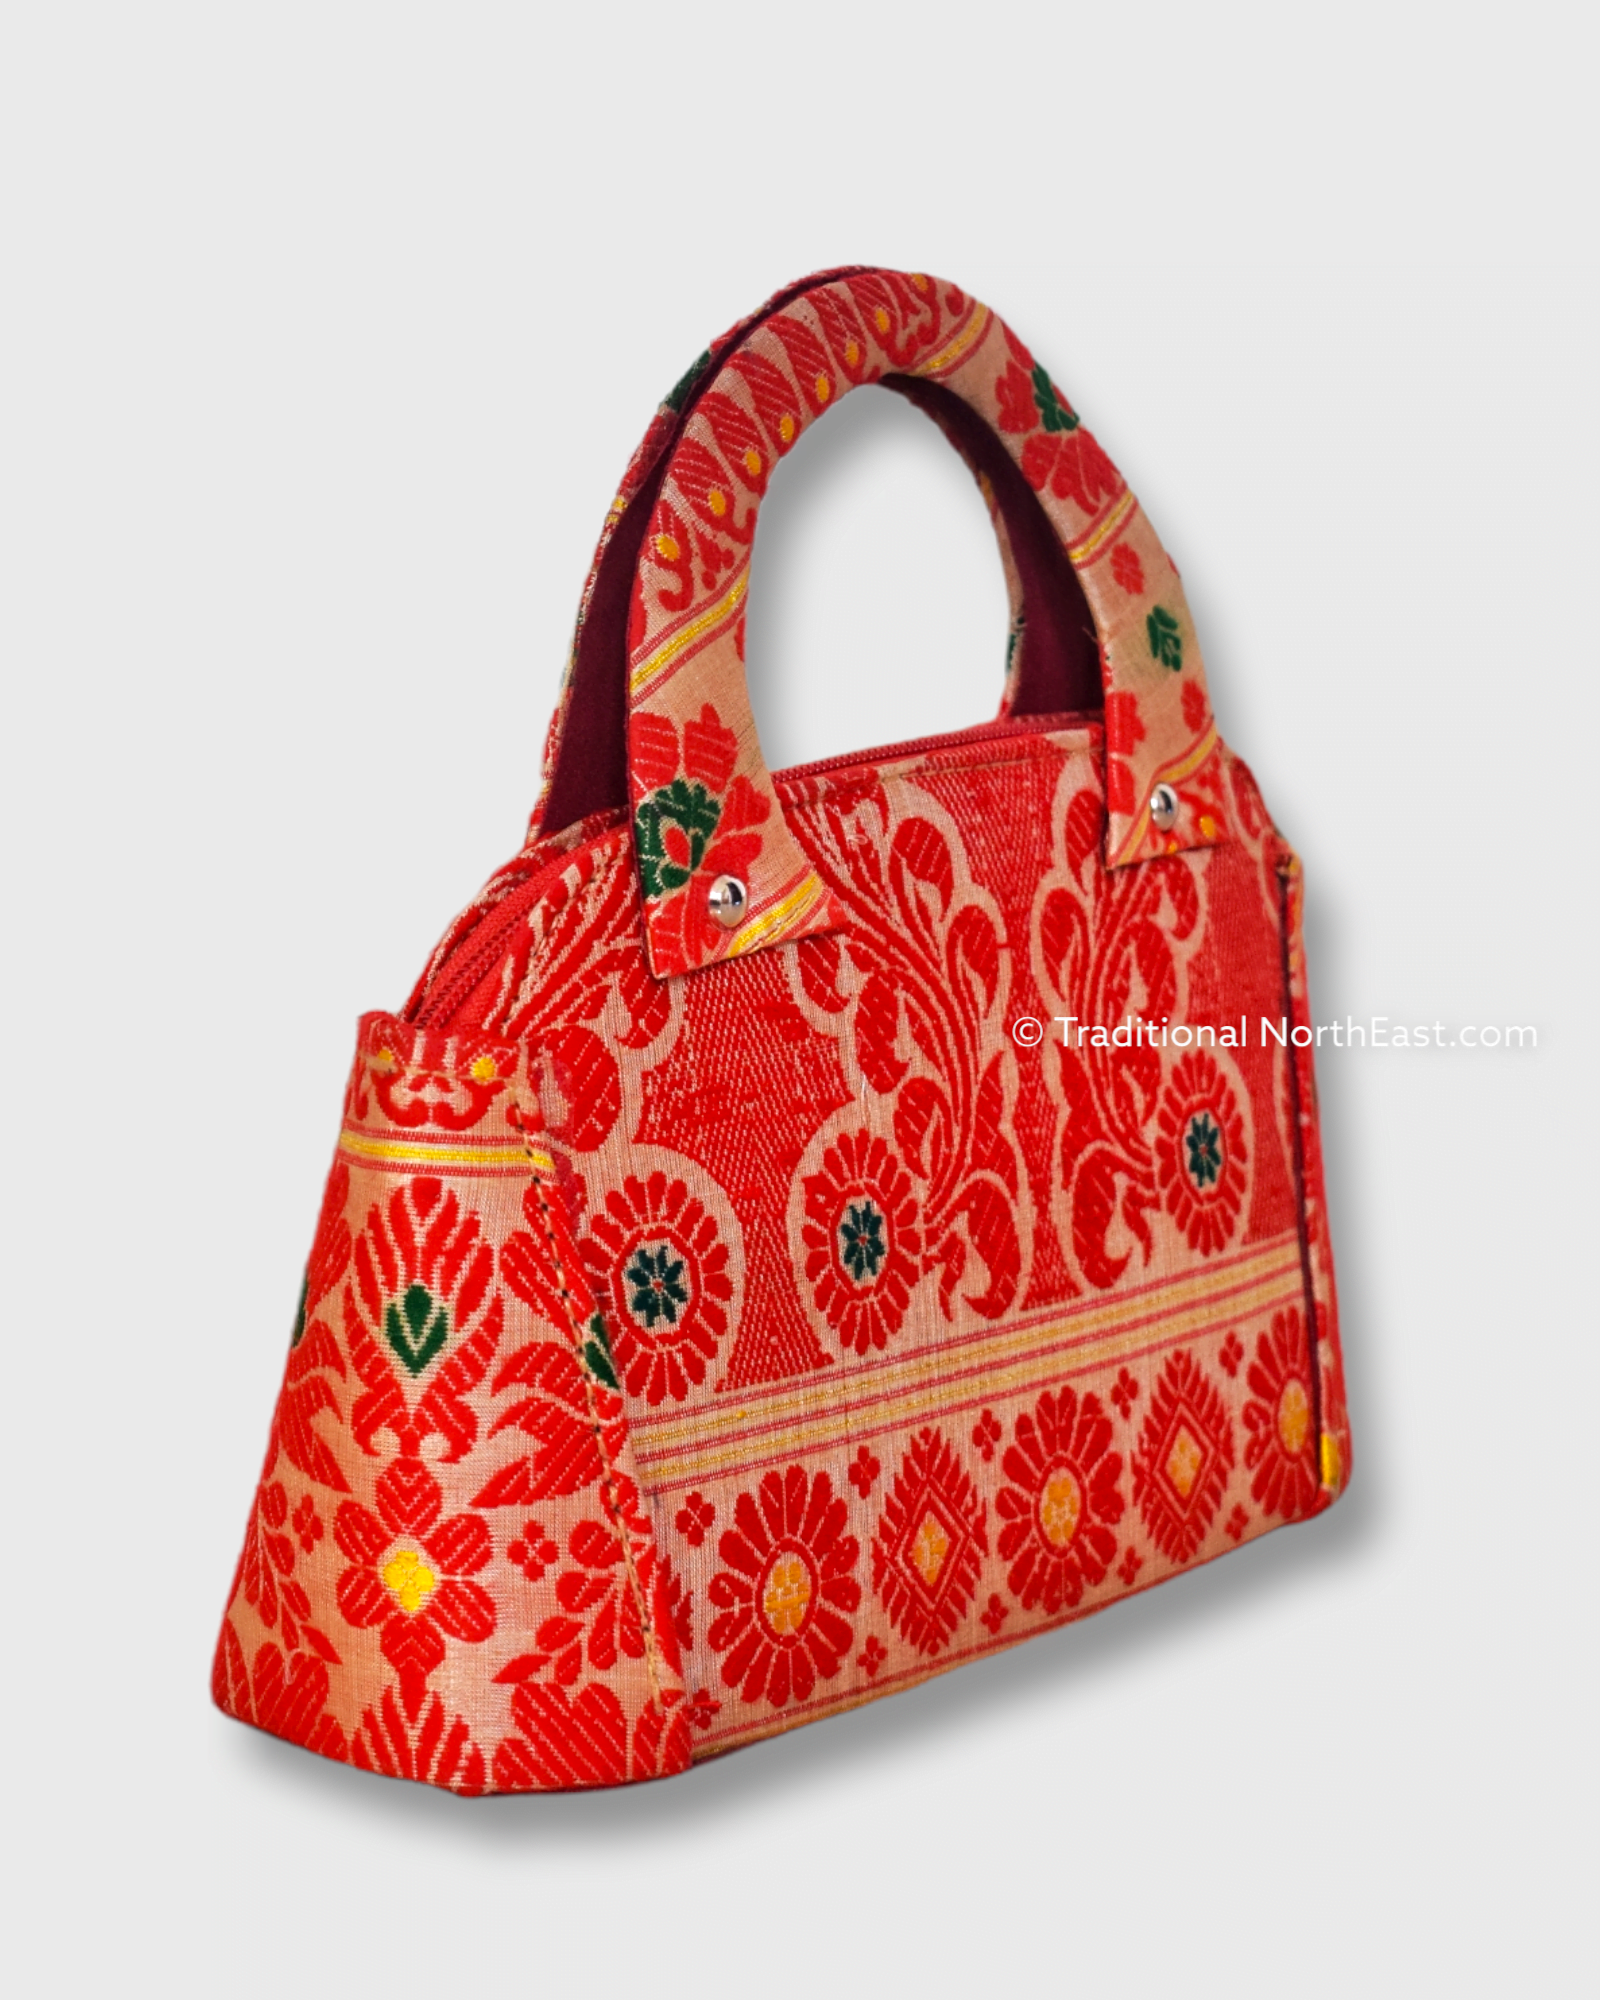 Creative Shapes Abstract Design Tote Bag by Raj Kamal - Photos.com